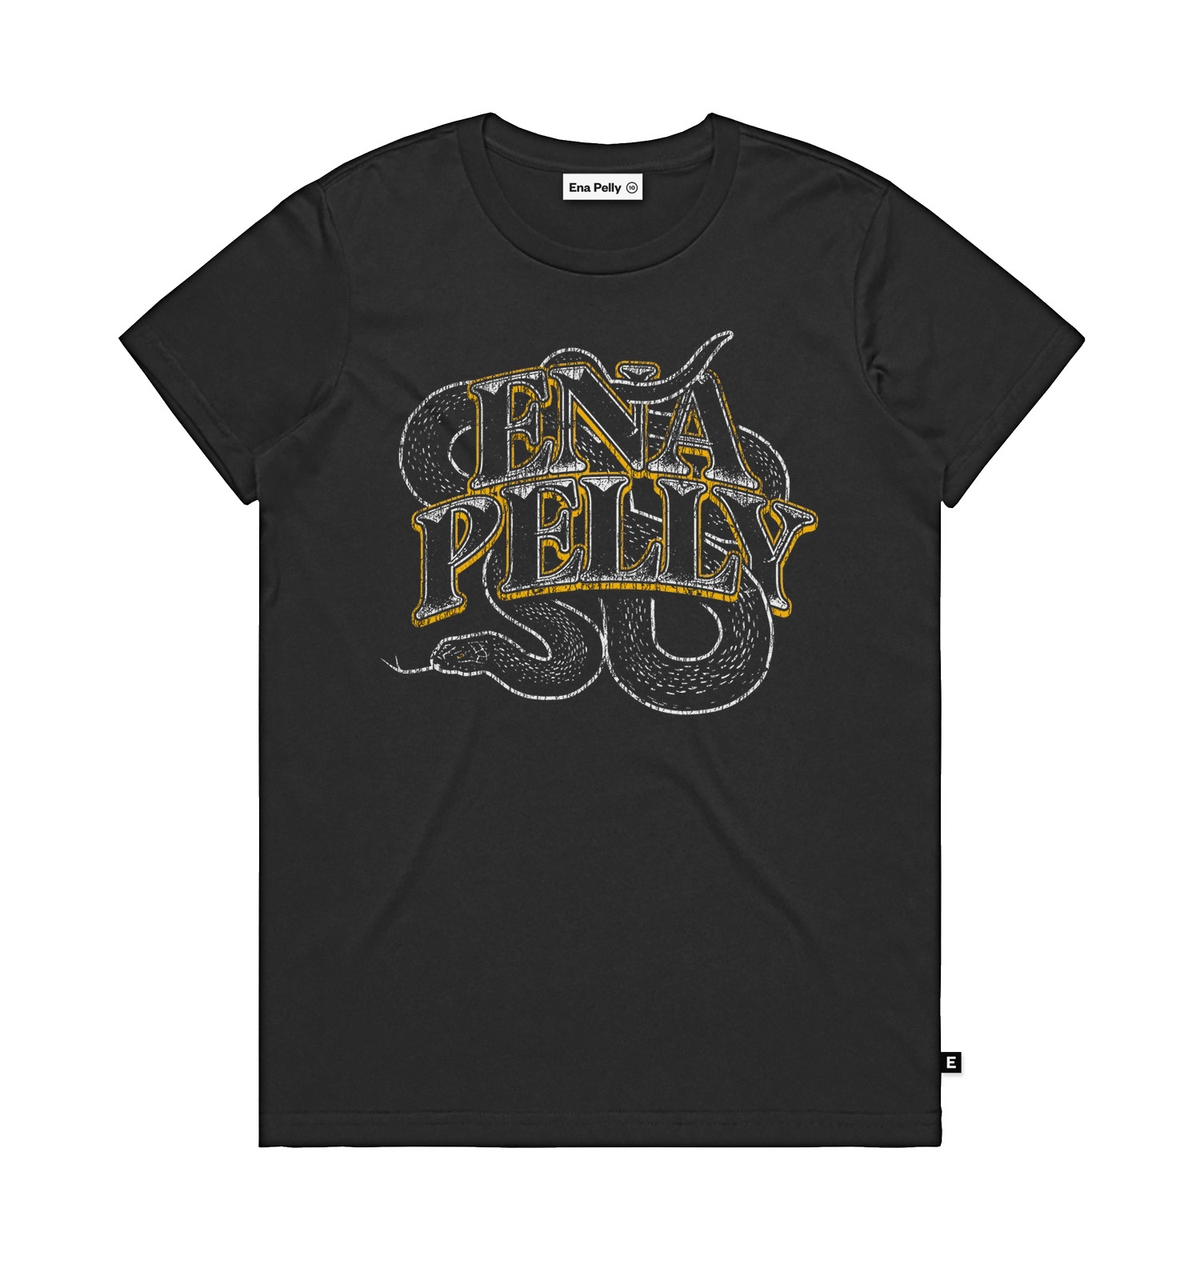 Ena Pelly - Snake T-Shirt Graphic | Atollon - a design company